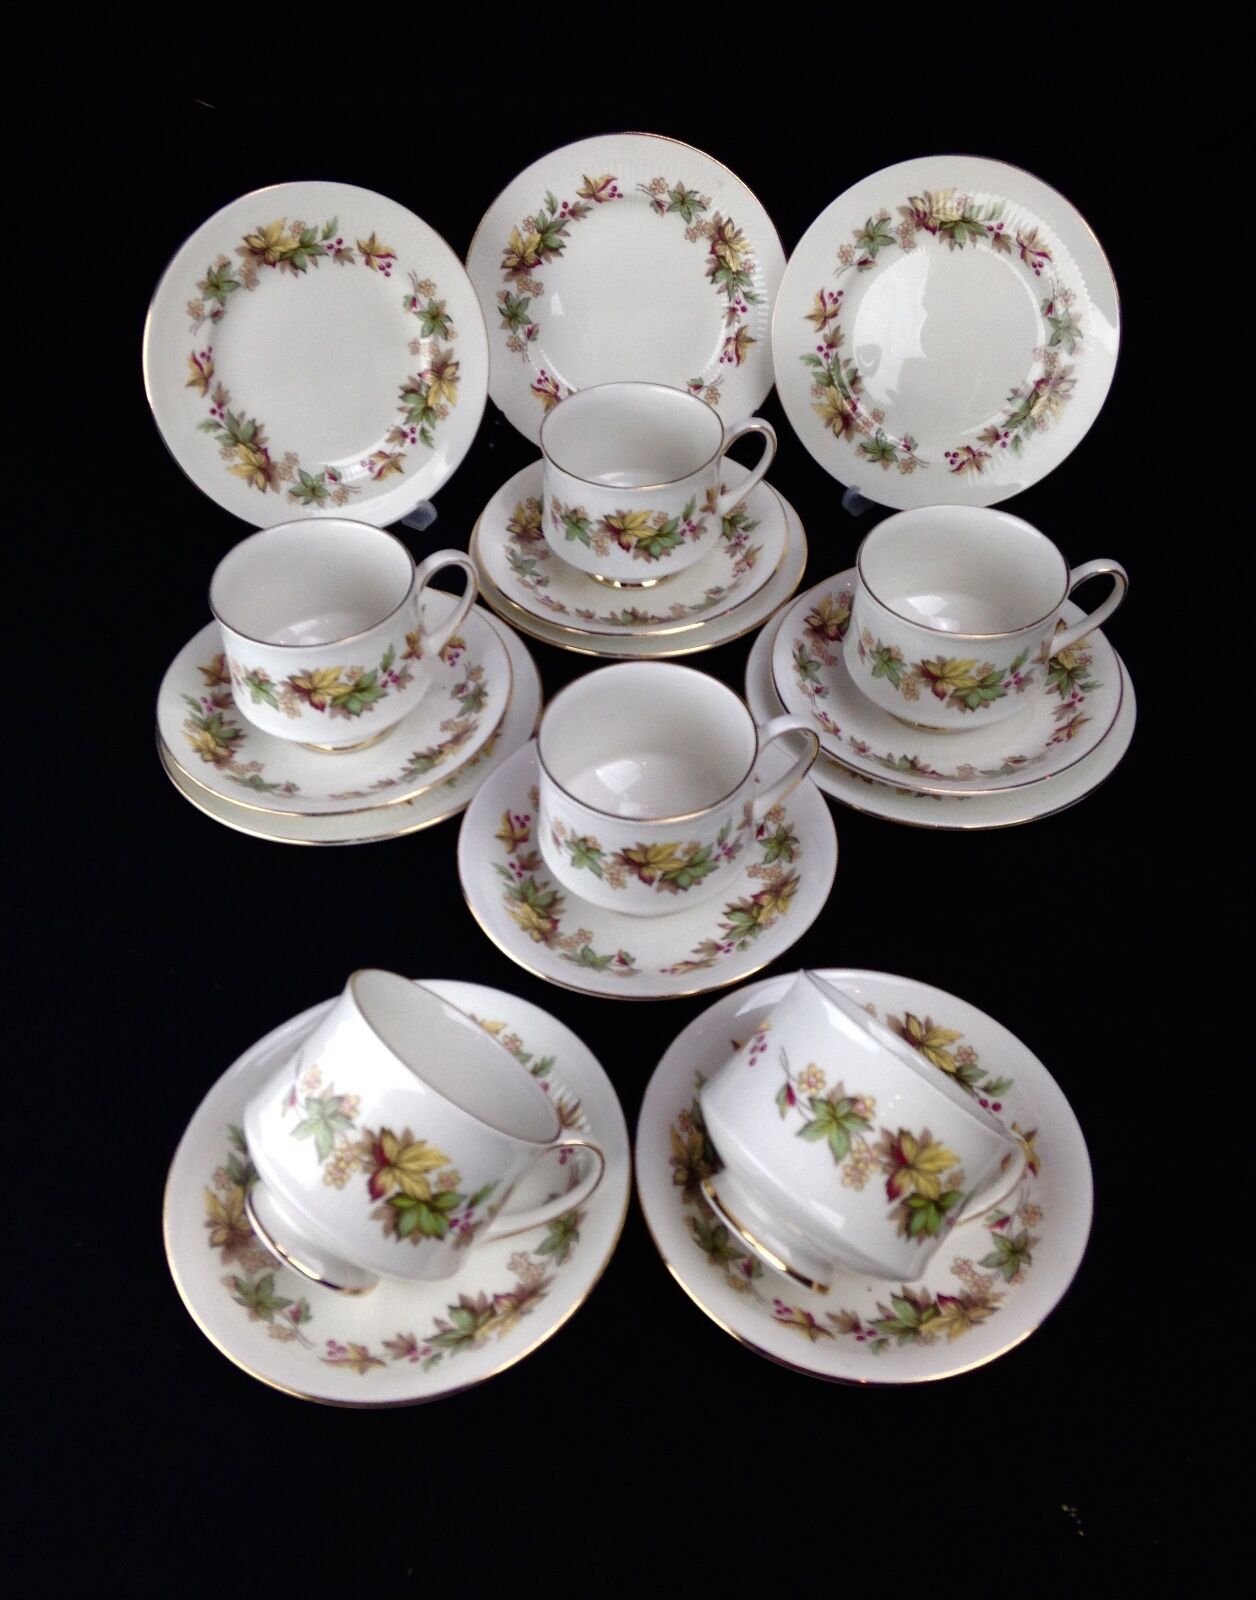 Royal Standard Tea Set / Afternoon Tea / Tea Cup And Saucer / Vintage / Floral